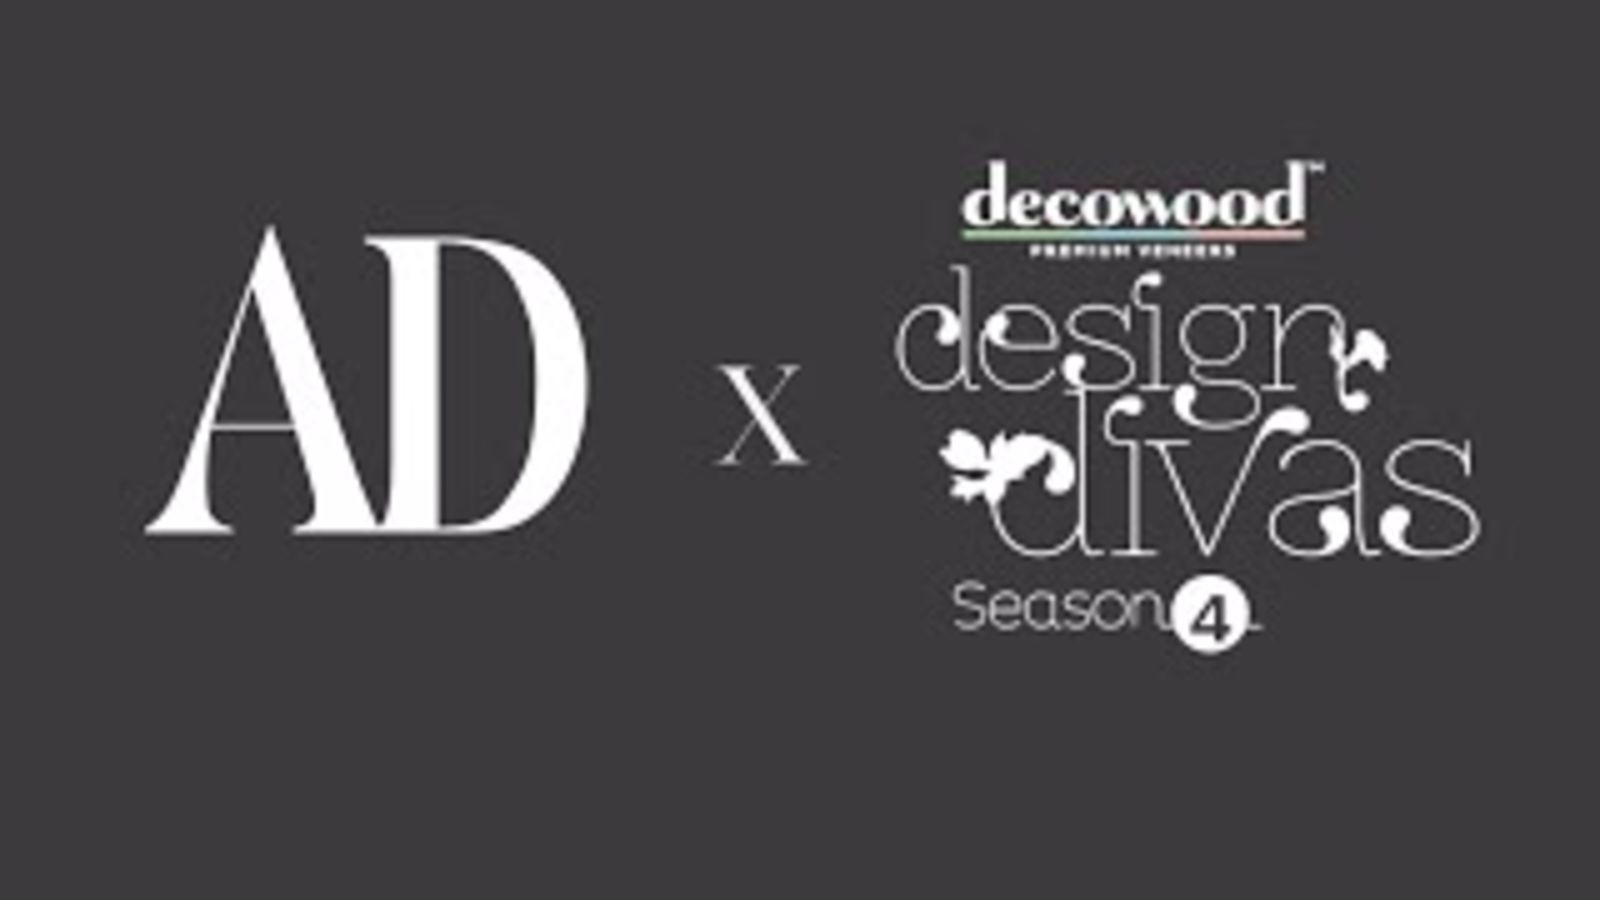 Decowood Design Divas Season 4 x AD